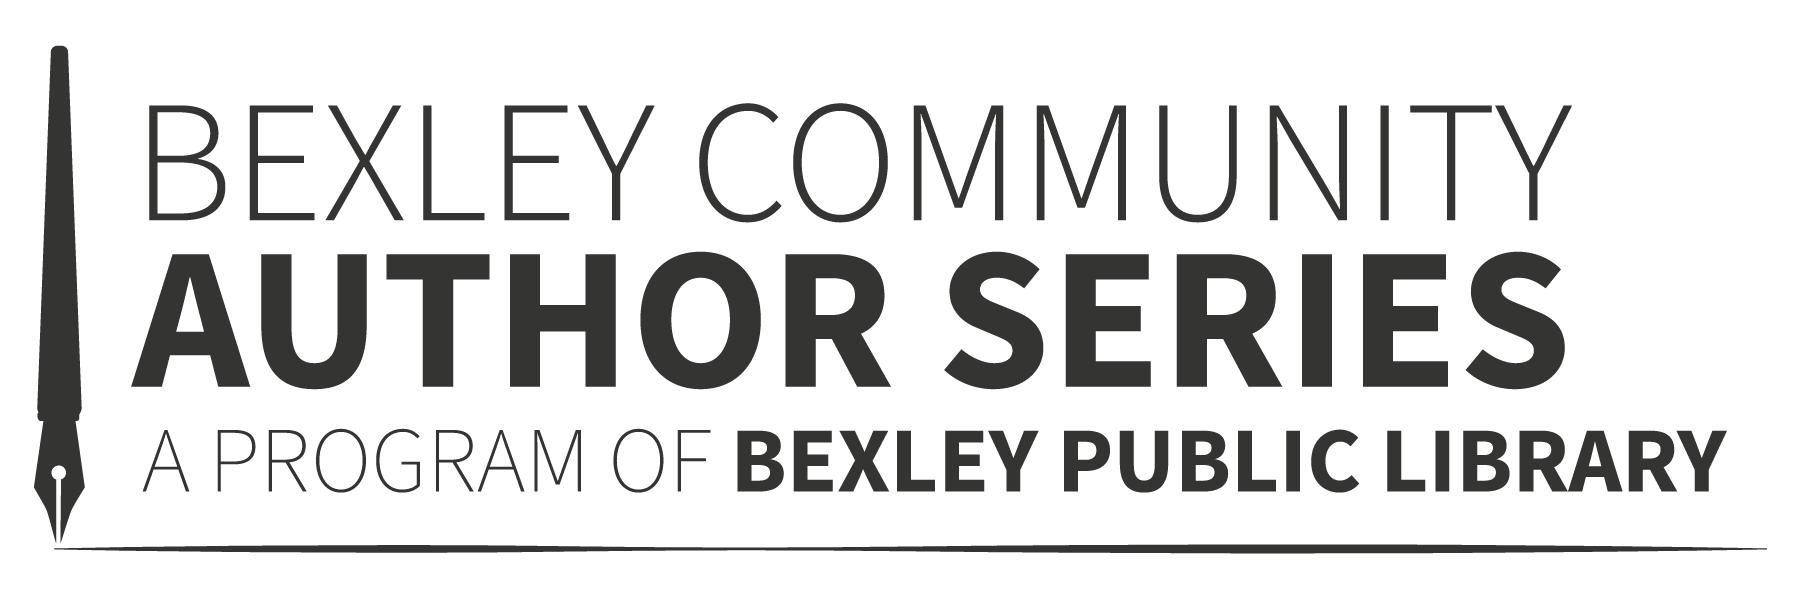 Bexley Community Author Series | A Program of Bexley Public Library